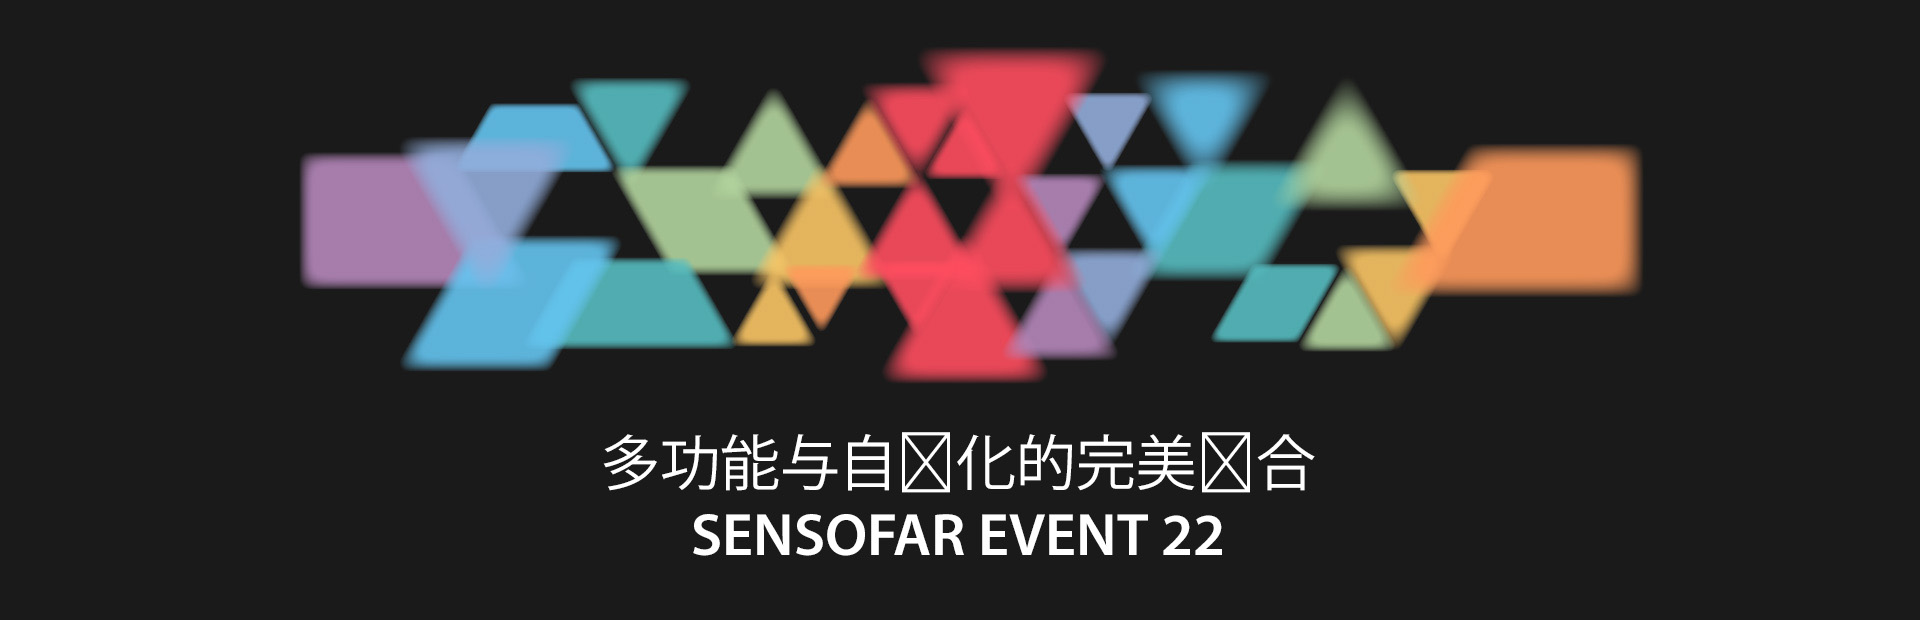 Sensofar Event 22